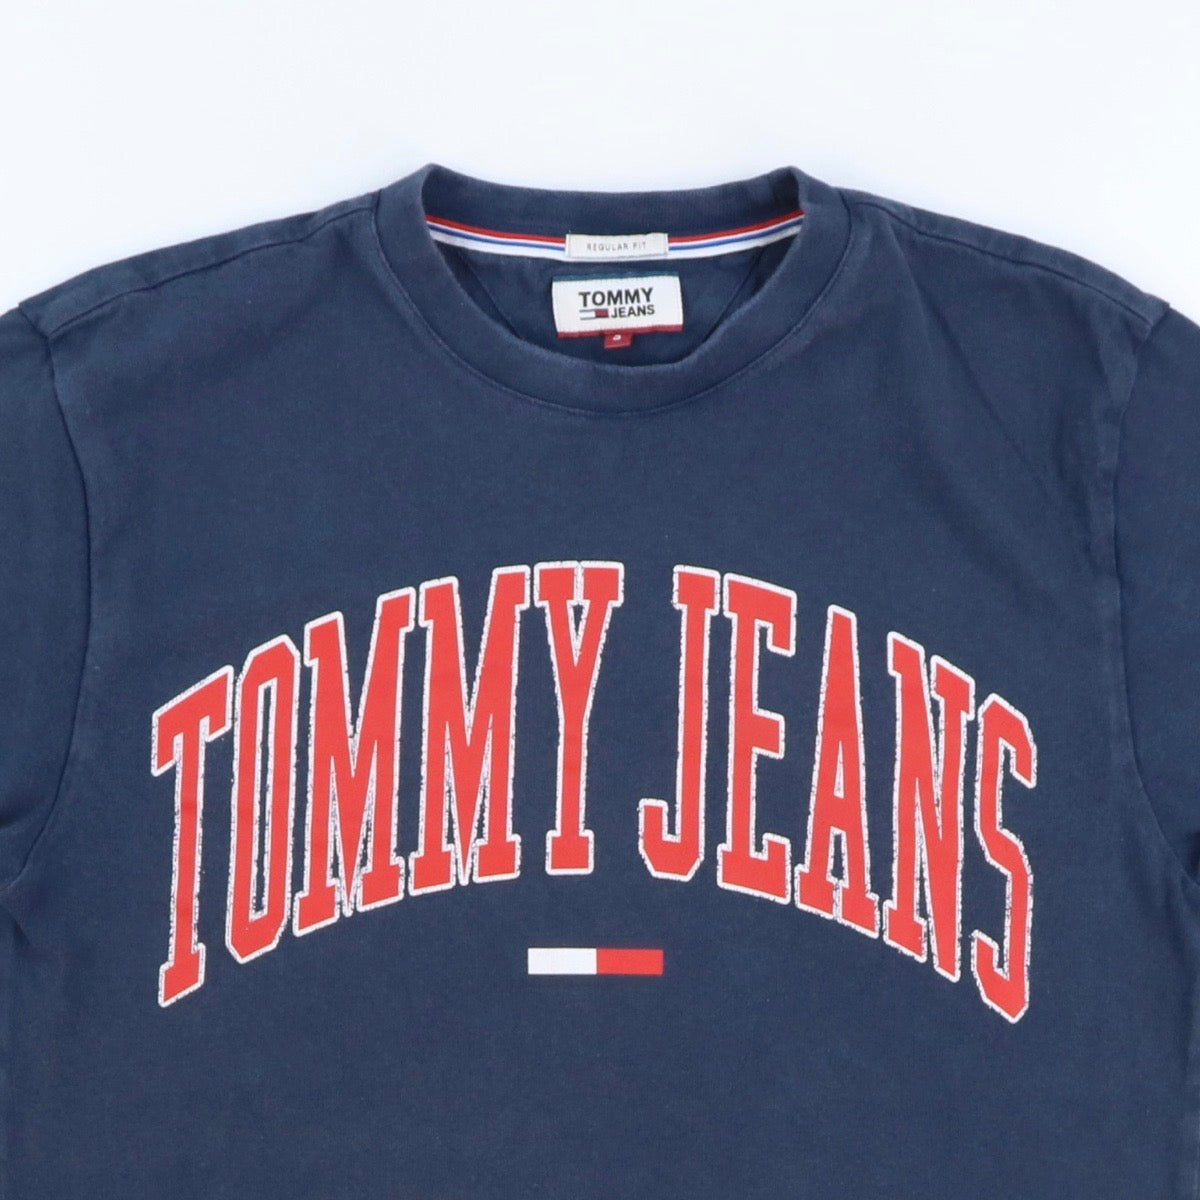 Tommy Hilfiger Tshirt (S)